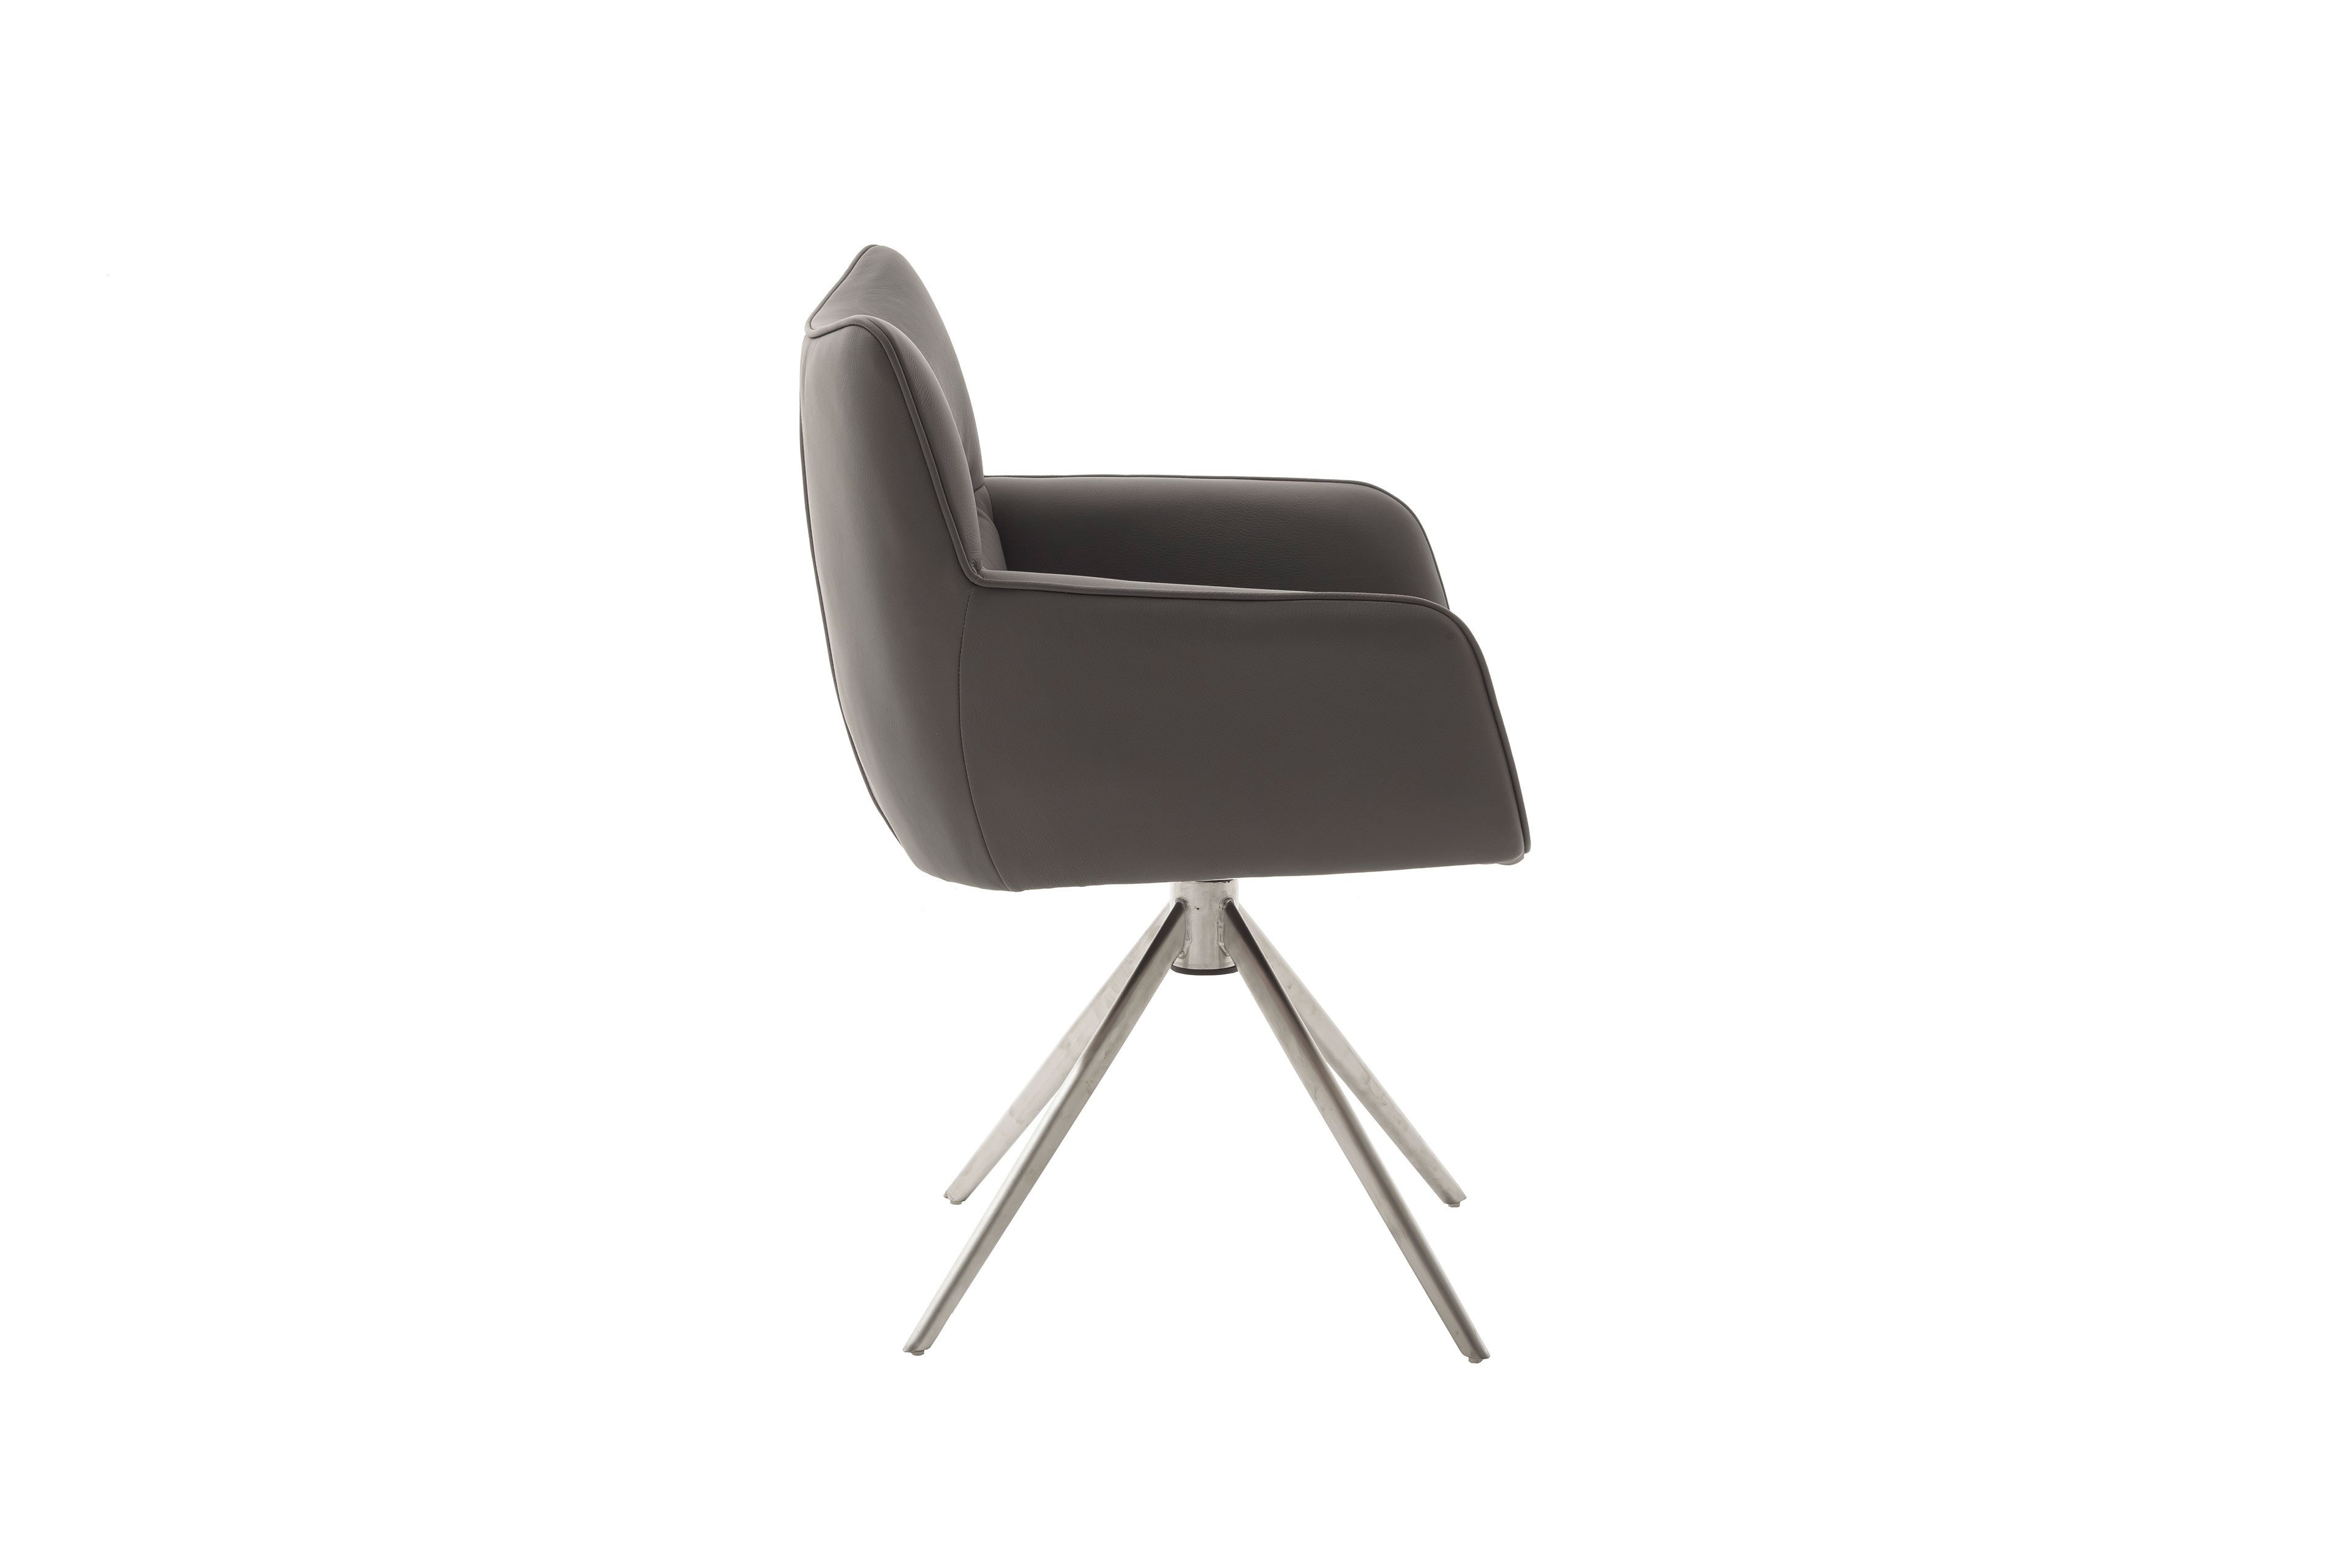 MCA furniture Stuhl Limone 2 - Lederbezug anthrazit | Möbel Letz - Ihr  Online-Shop